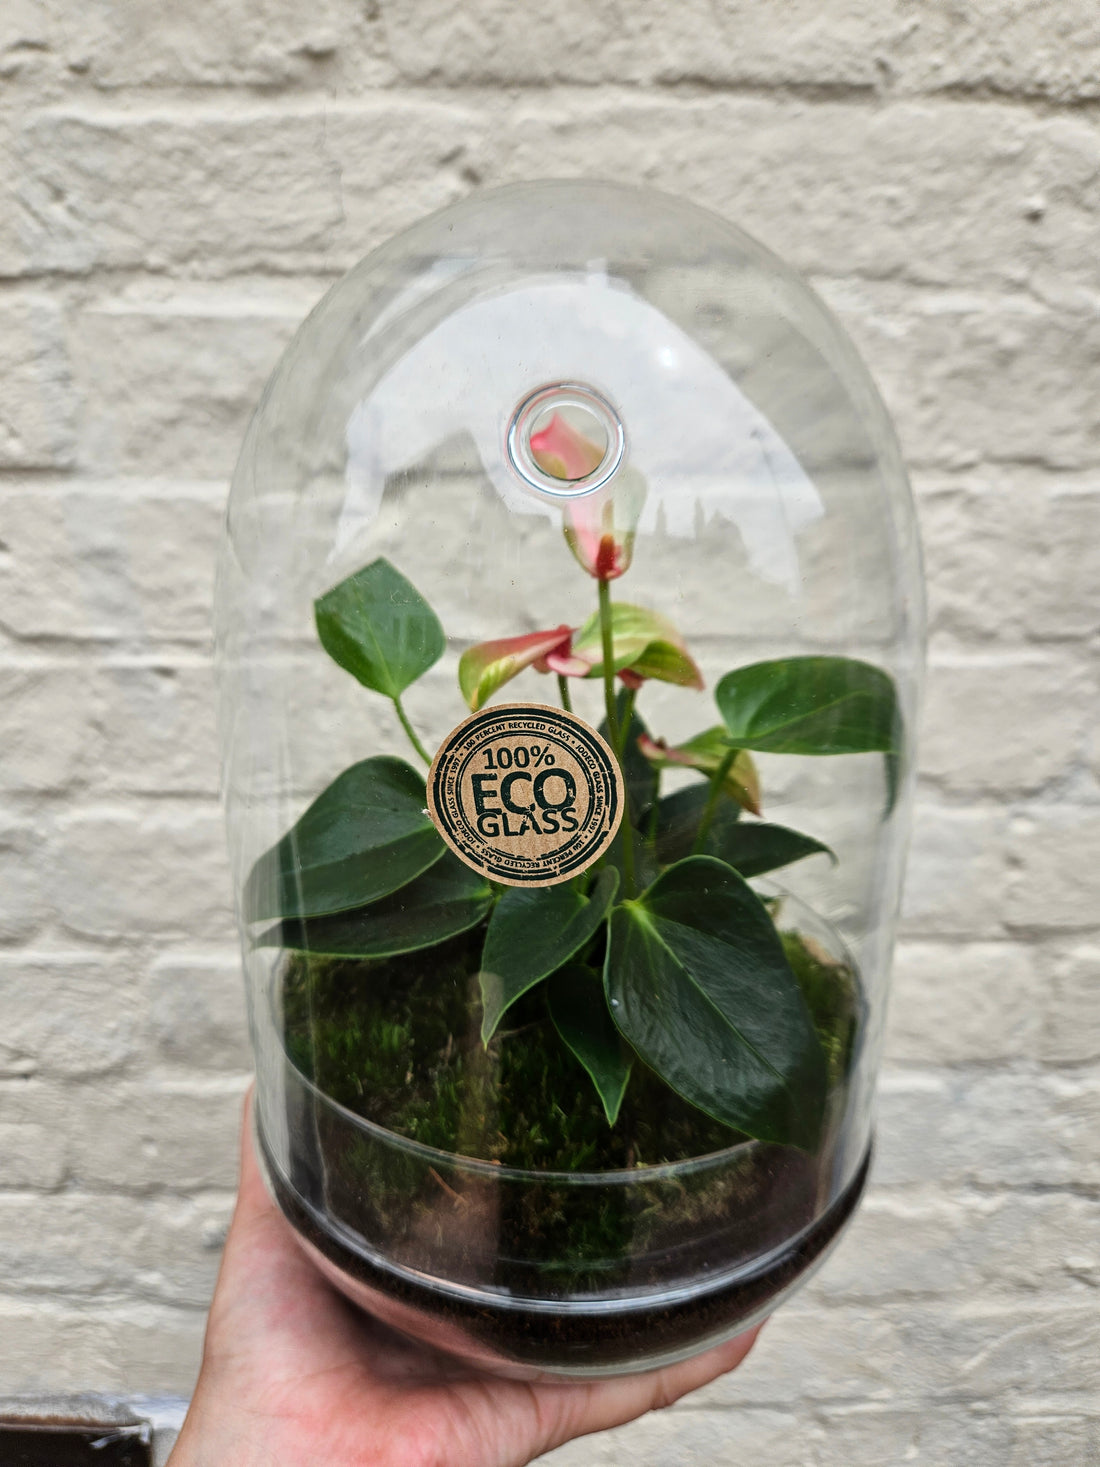 Eco glass medium sized cloche style terrarium